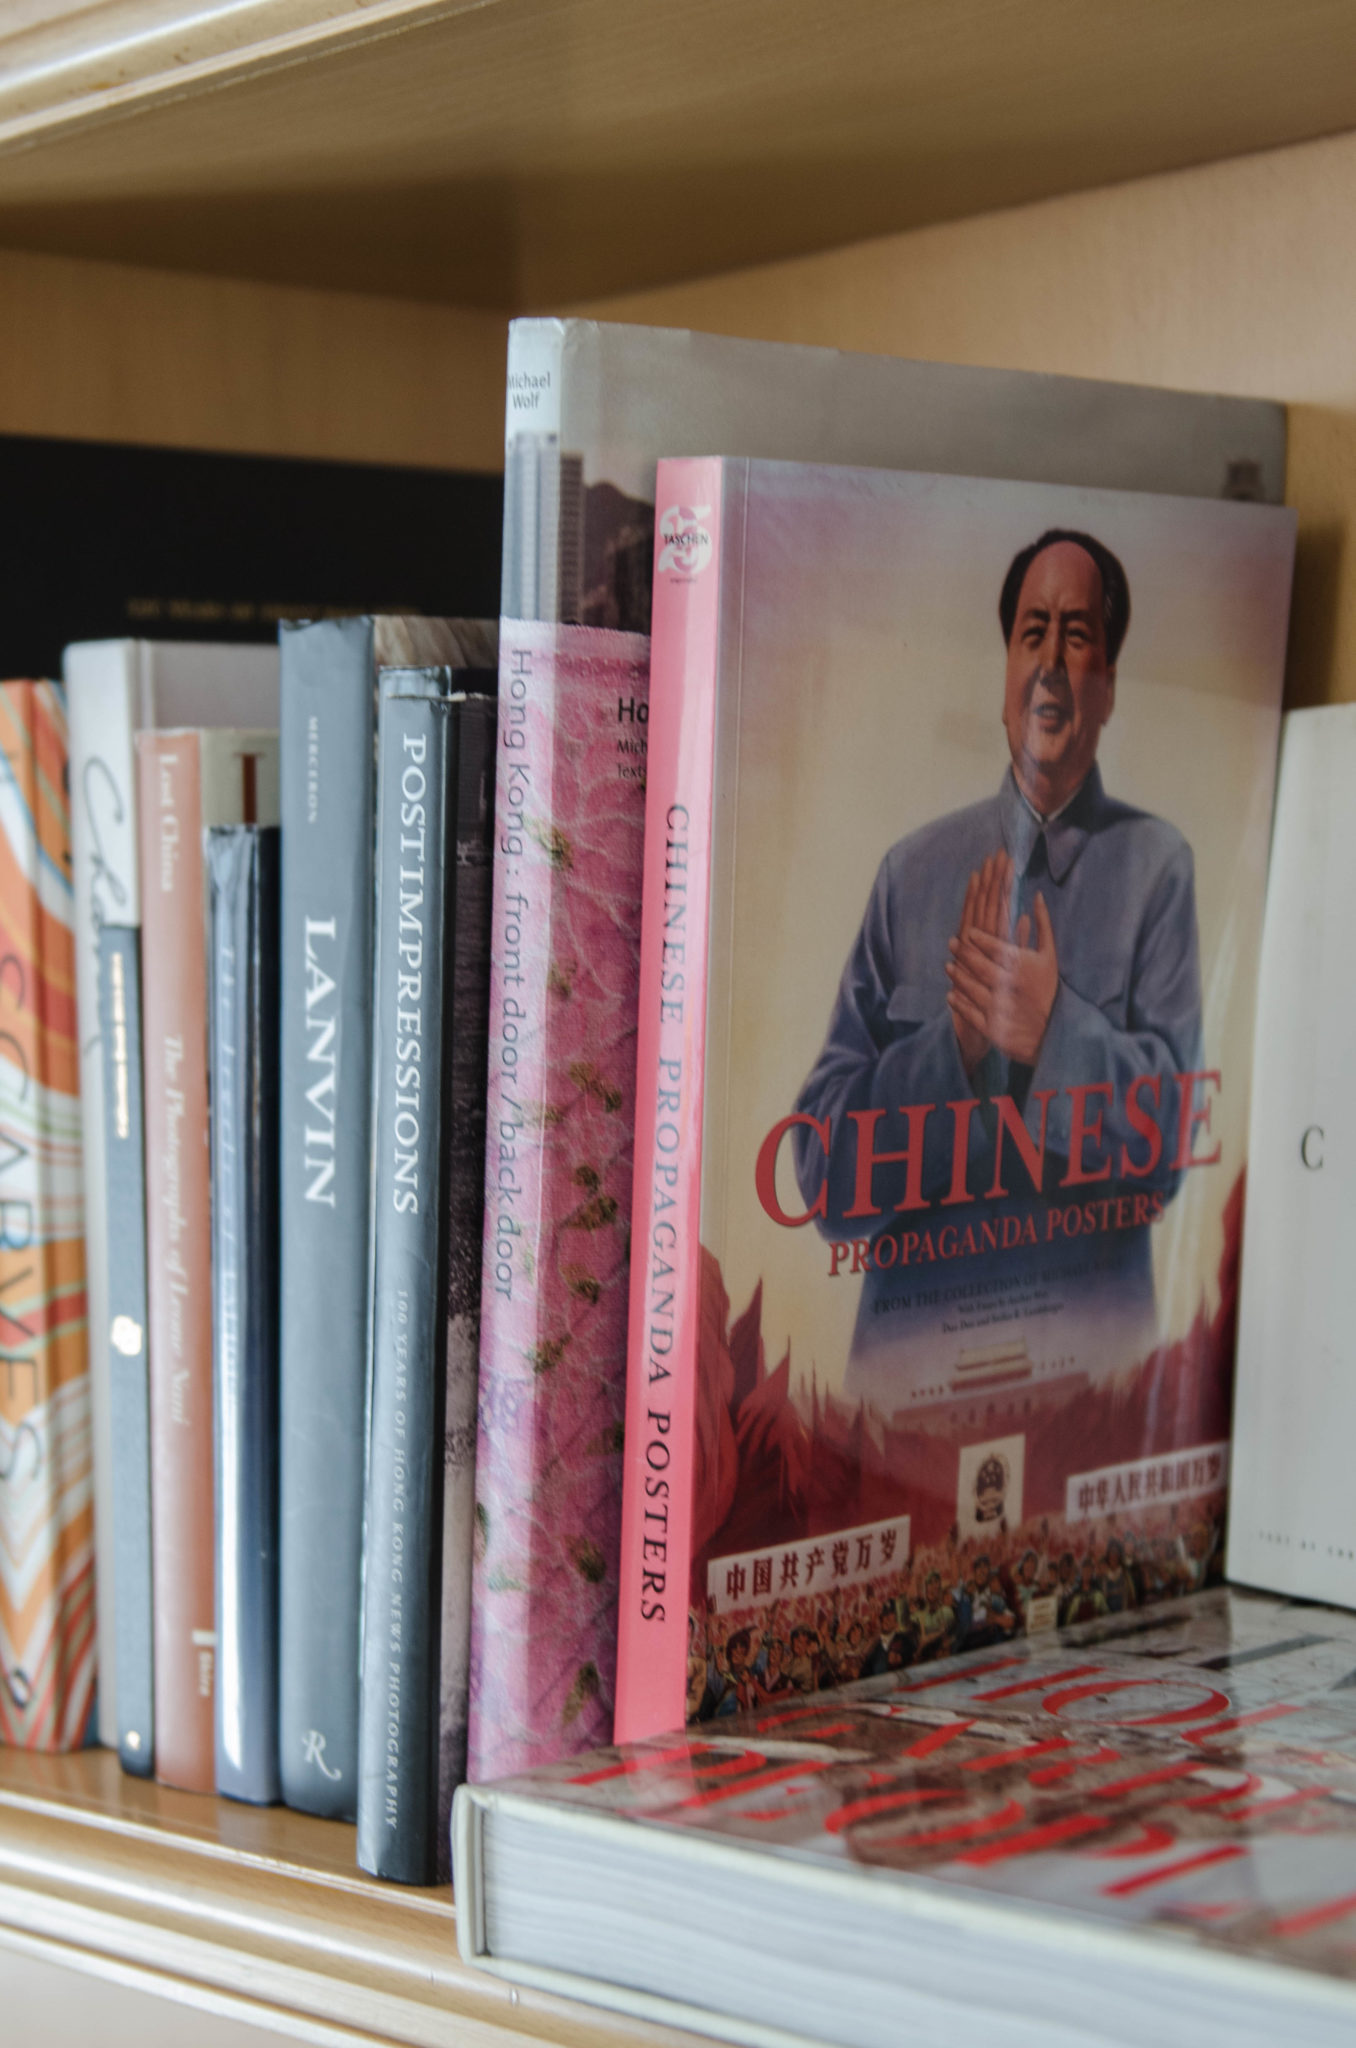 Lanson Place Hotel Hongkong: Die Buchauswahl in der Bibliothek ist sehr variabel